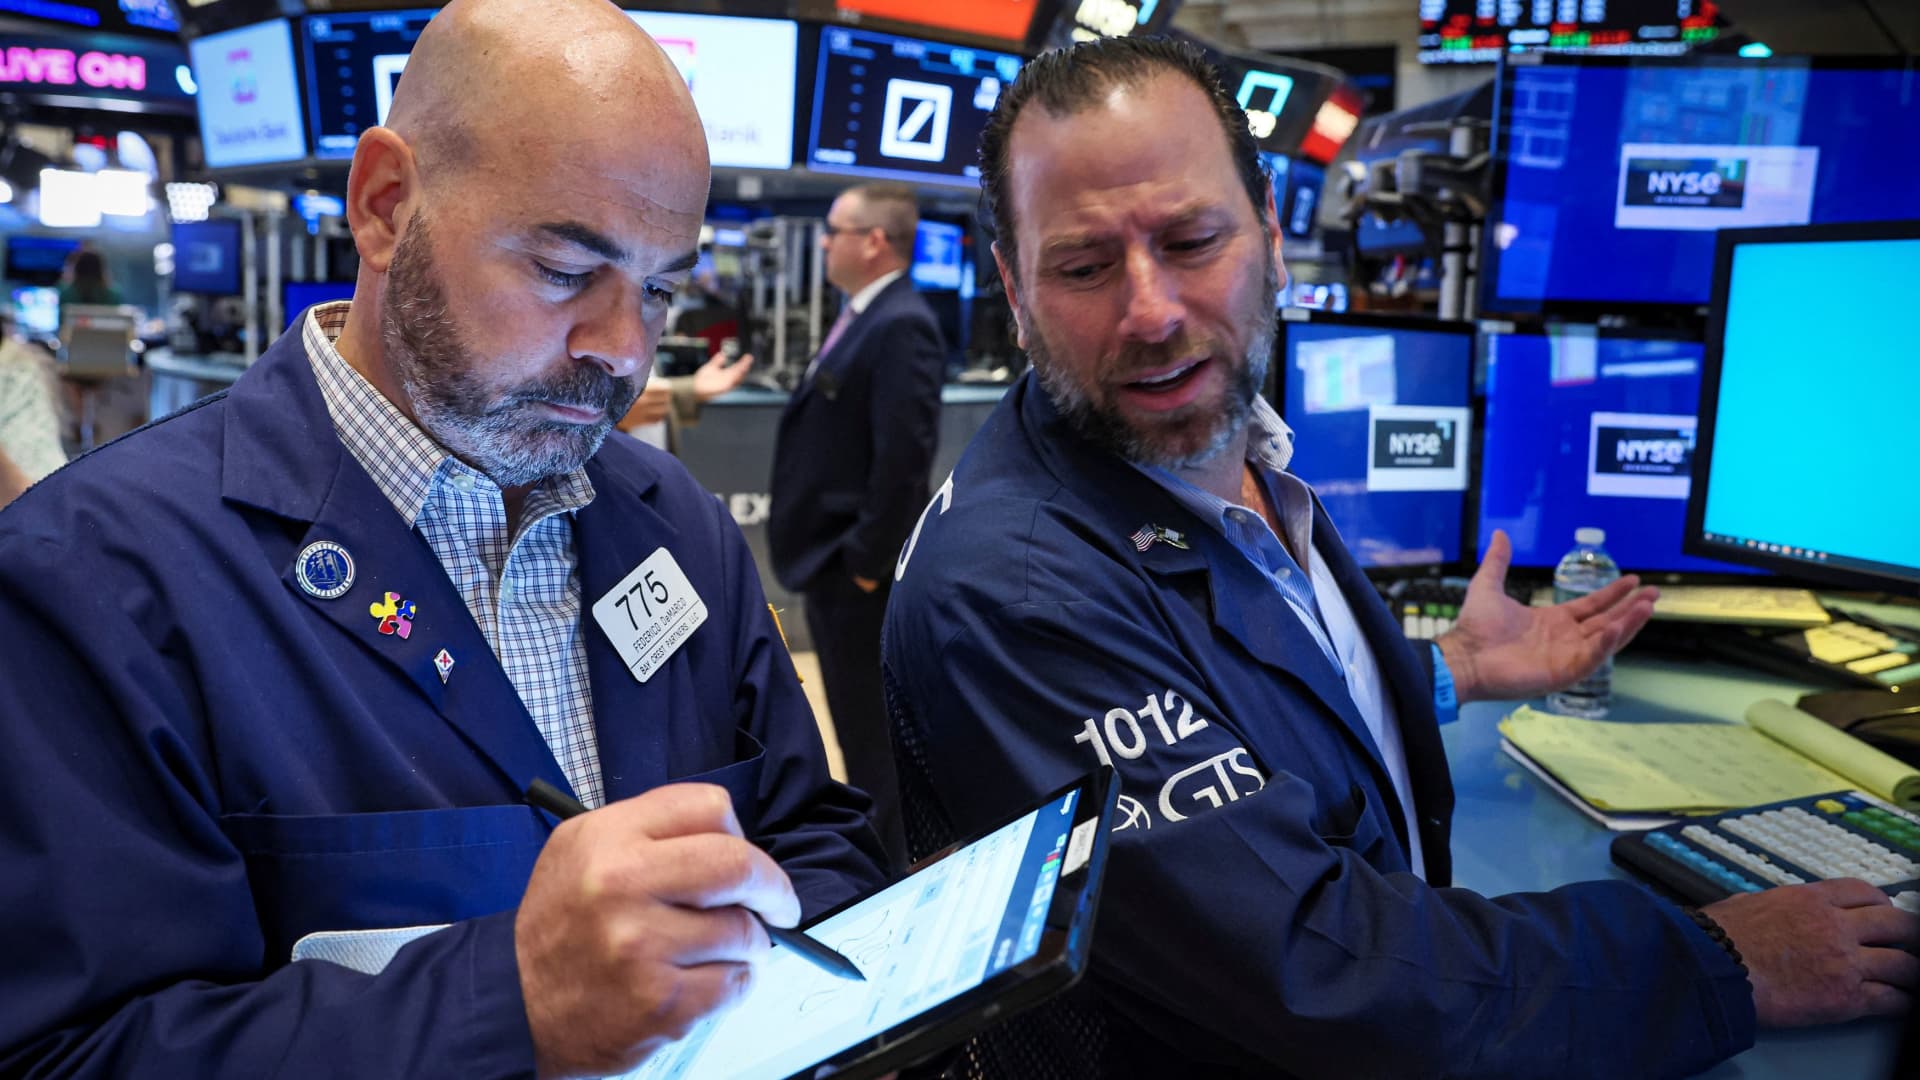 Stock futures rise slightly as Wall Street awaits more major bank earnings